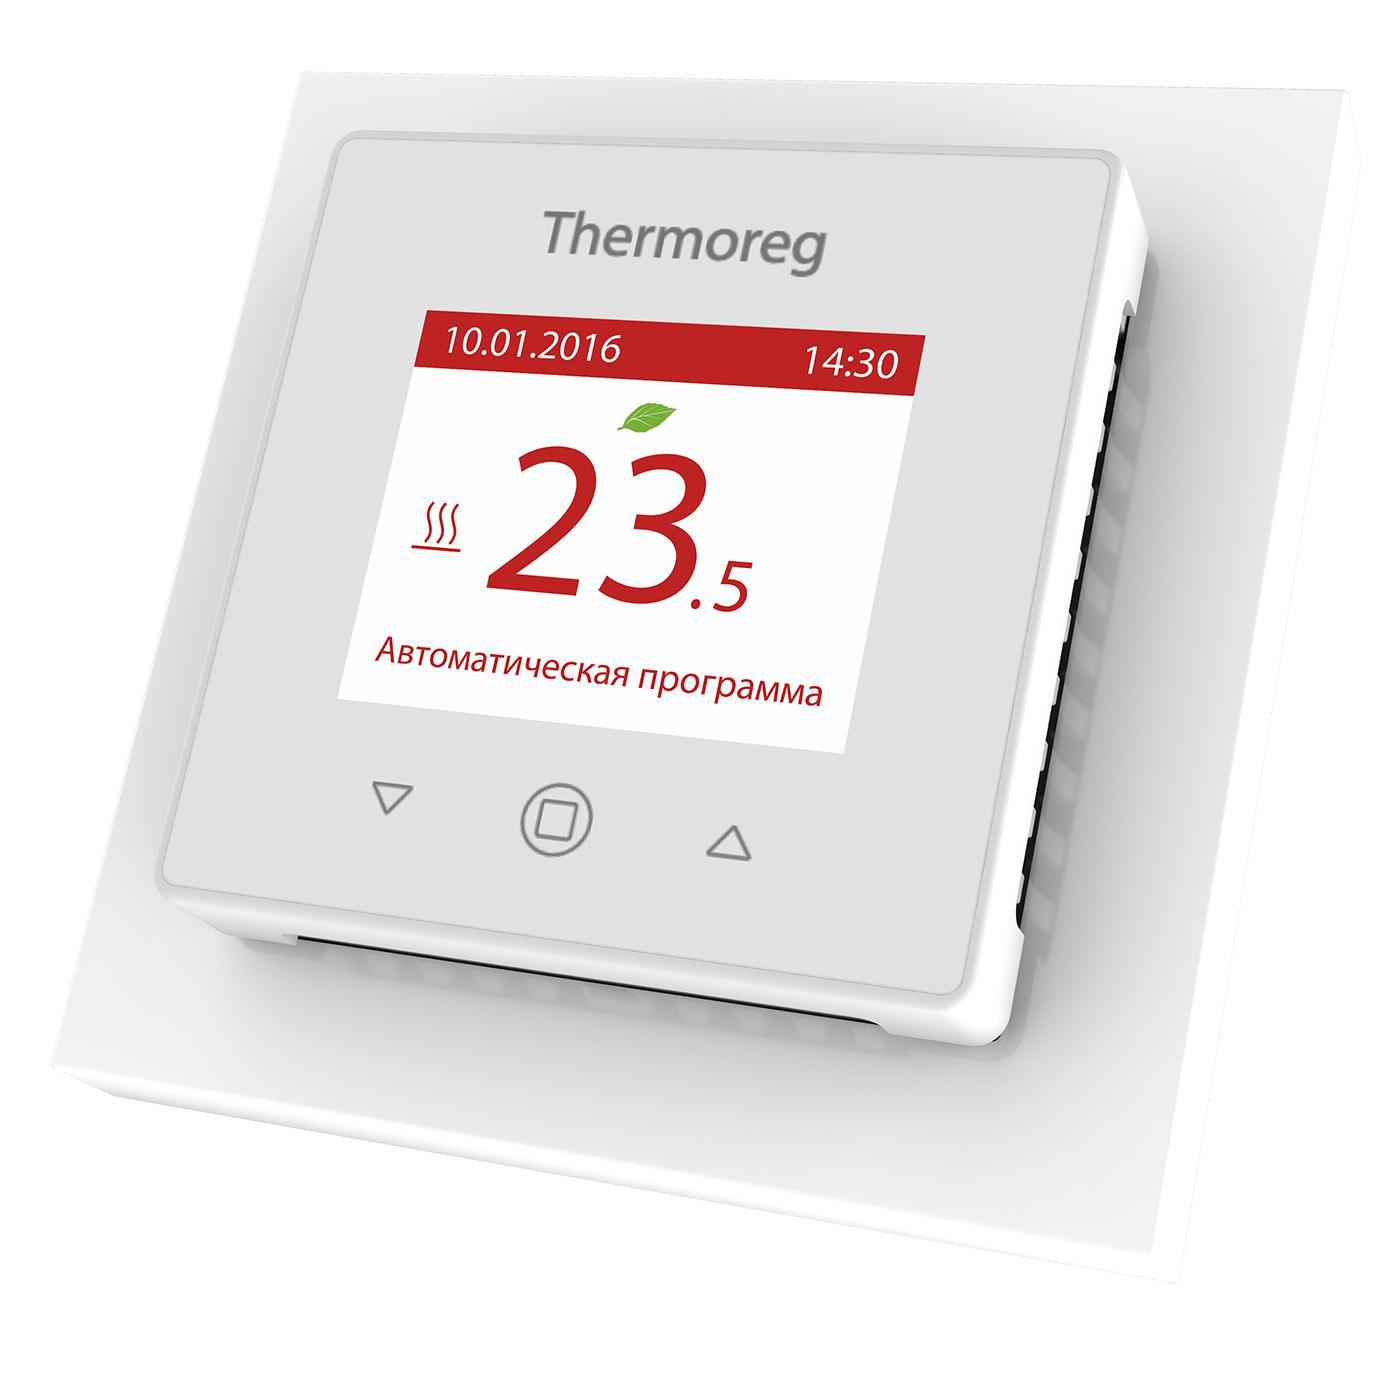 90021404 Терморегулятор для теплого пола reg TI-970 электронный программируемый цвет белый STLM-0087774 THERMO